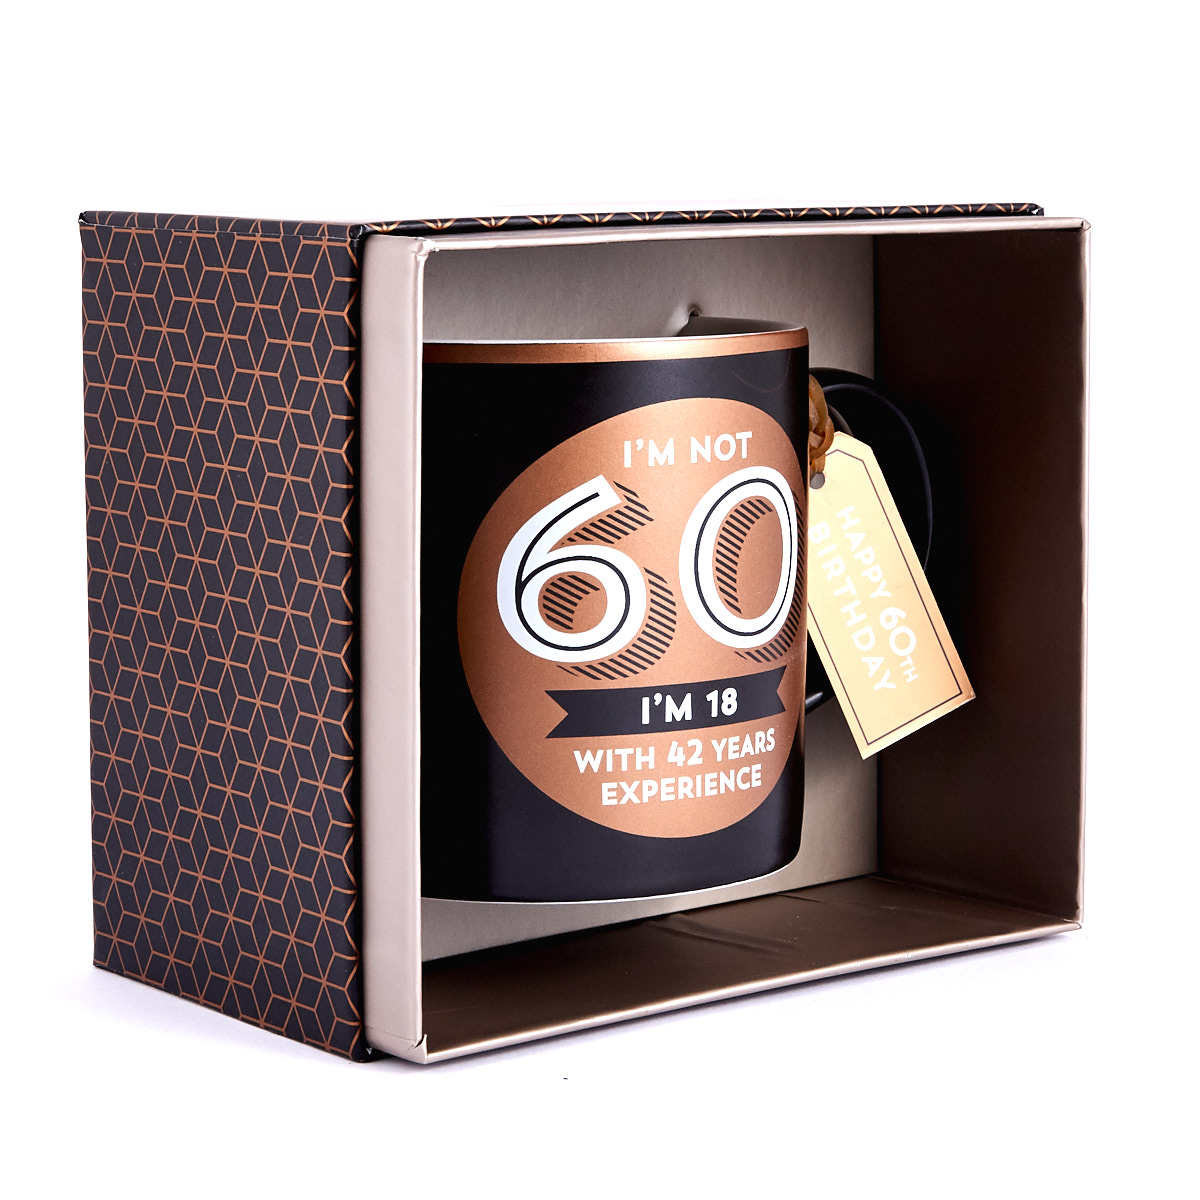 60th Birthday Mug - 18 With 42 Years Experience